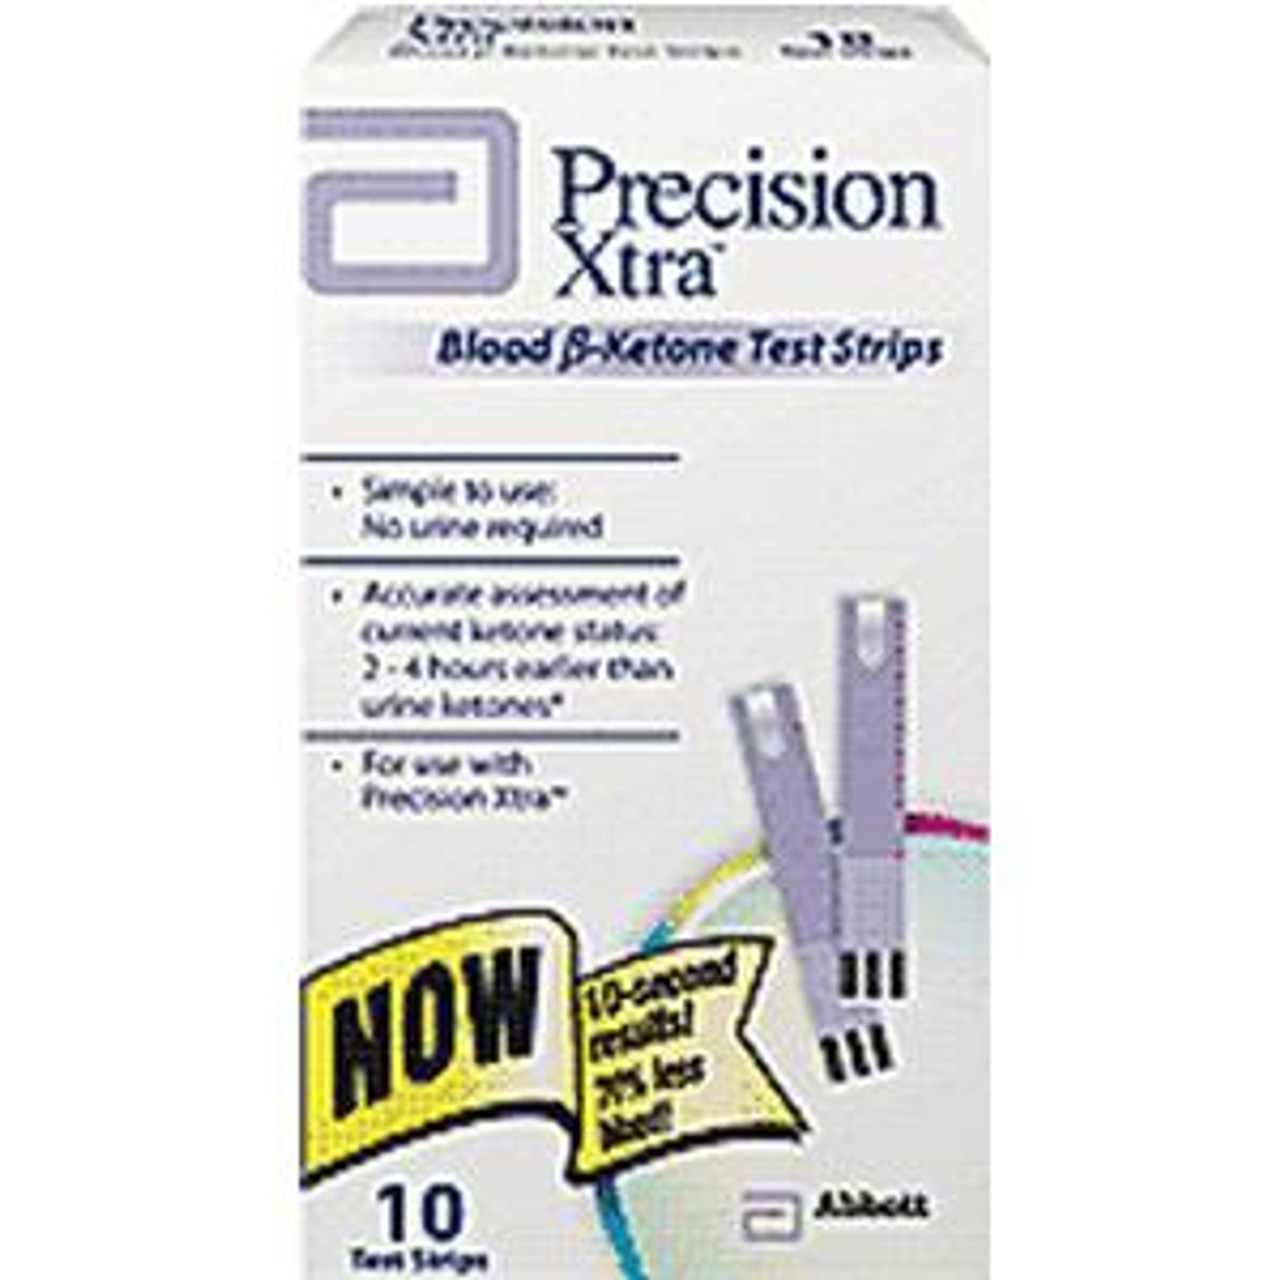 Abbott Precision Xtra Blood Glucose Test Strips, 100 count